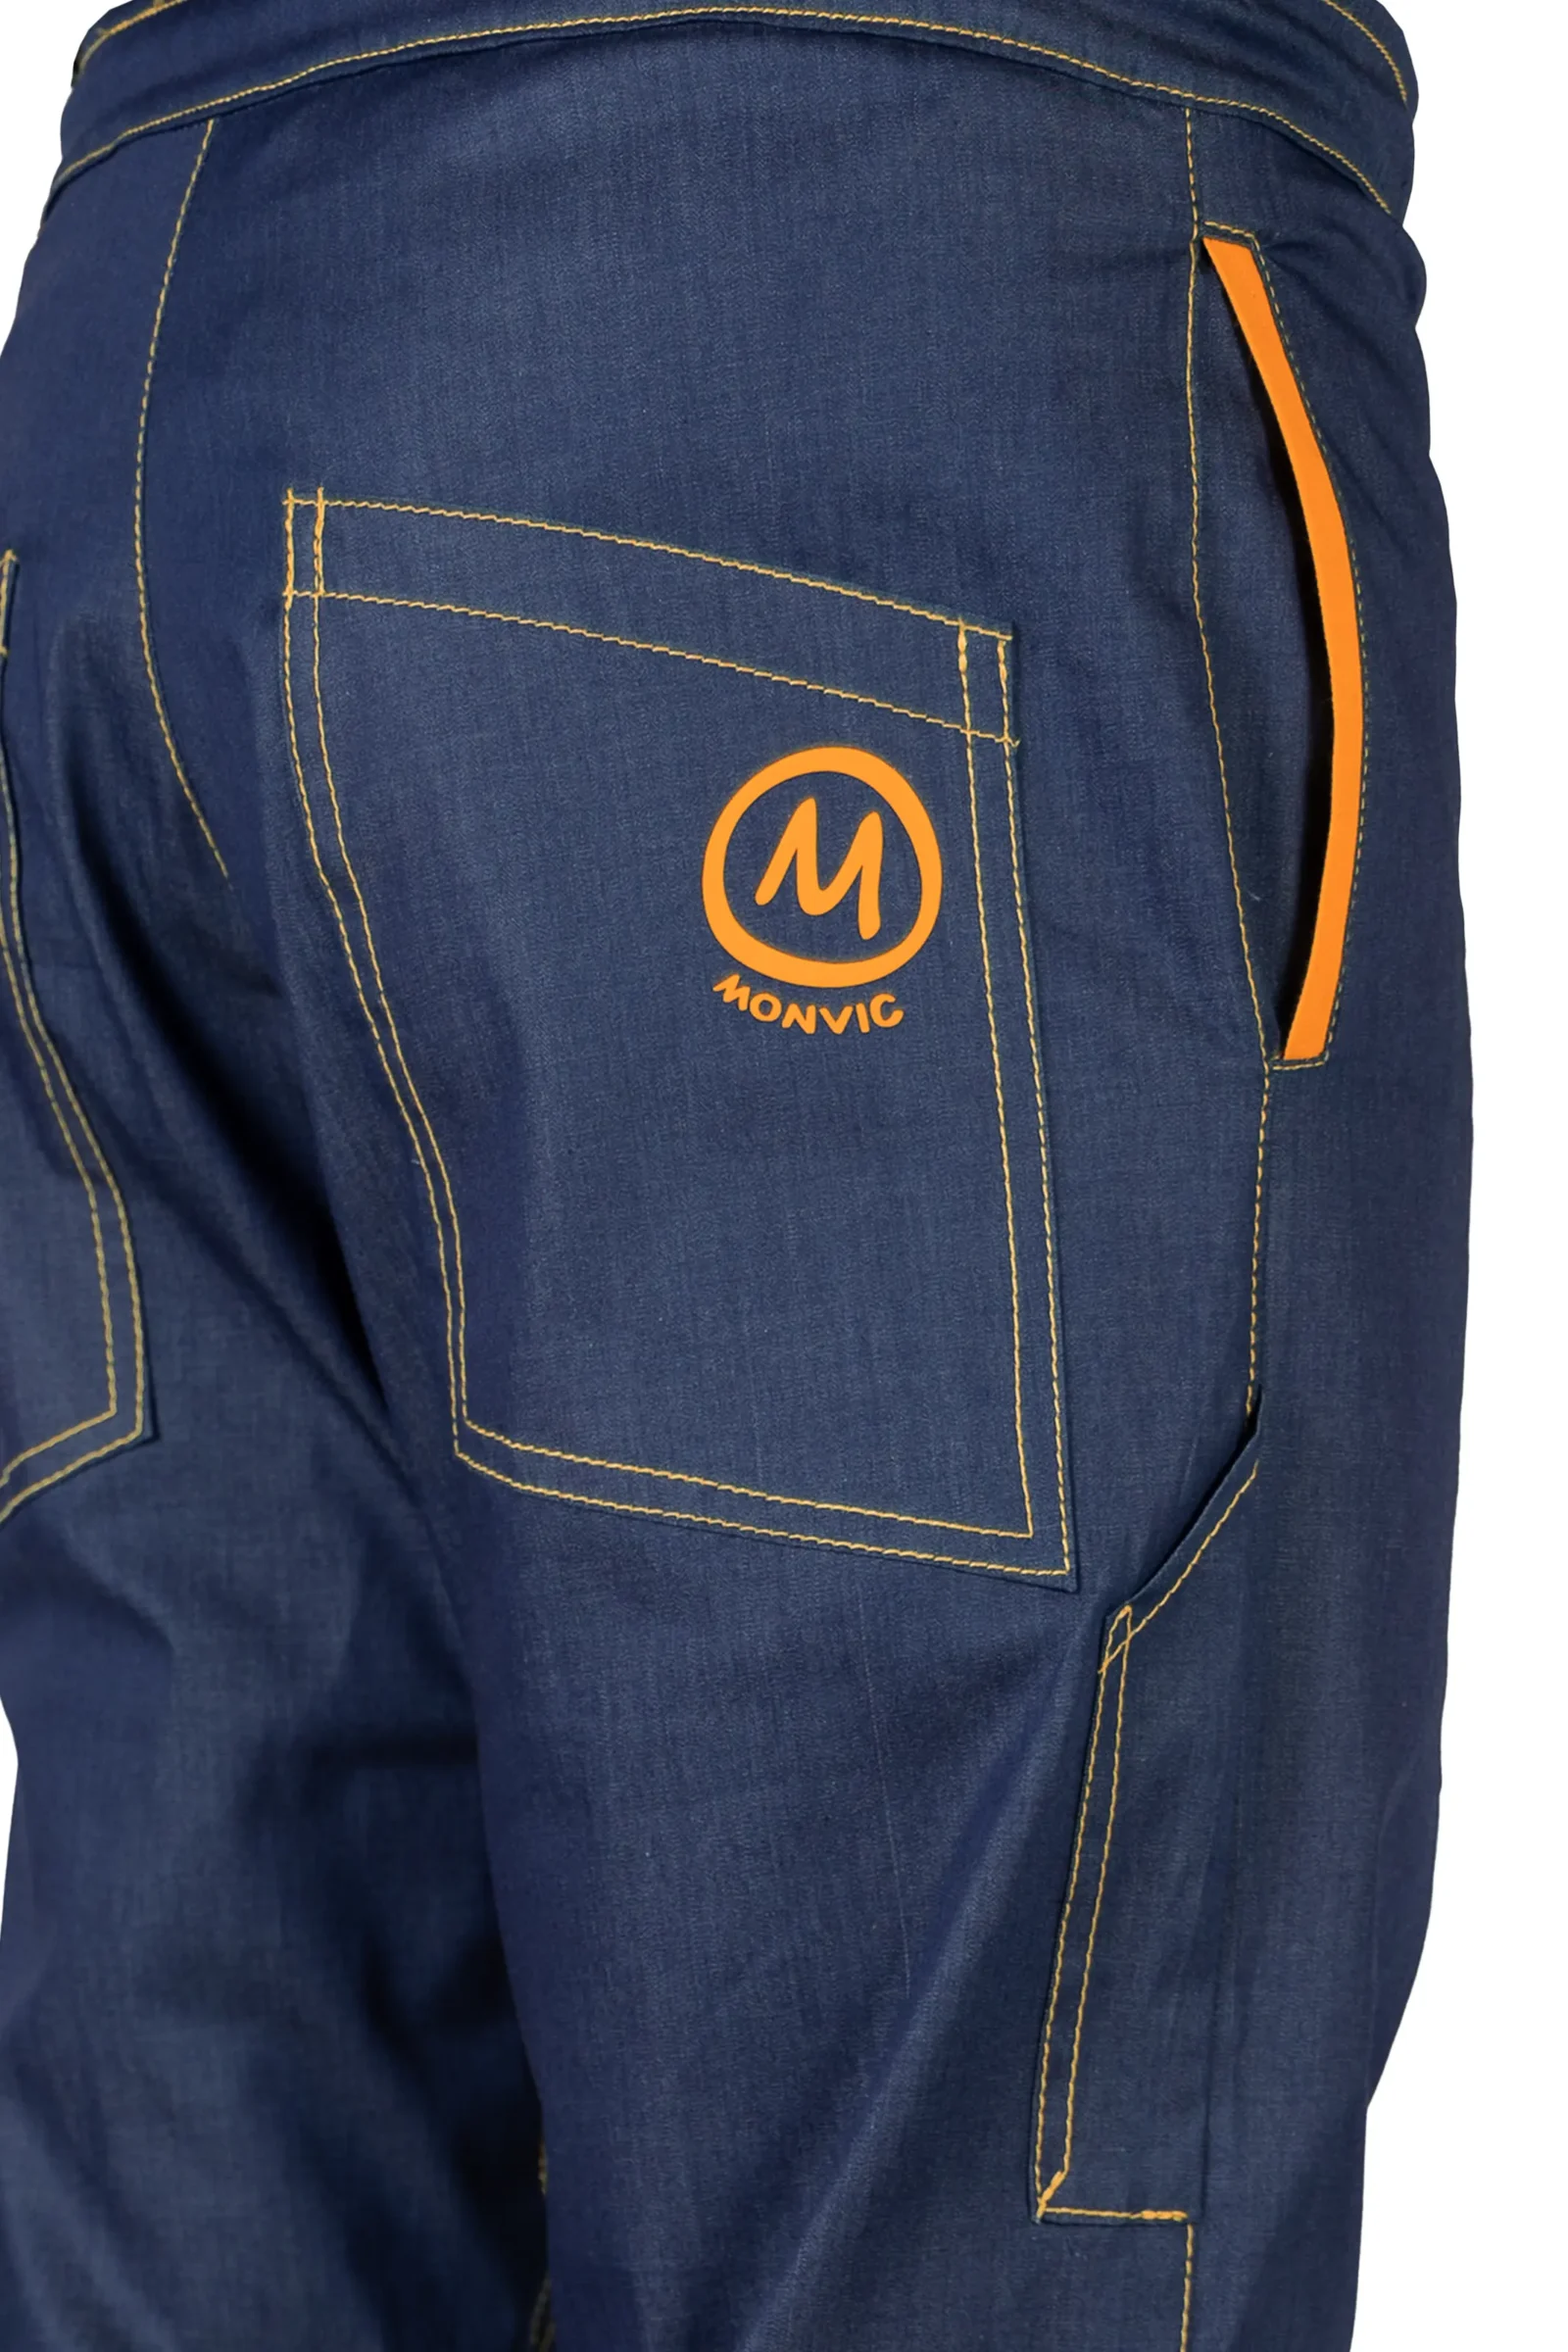 Climbing jeans uomo - pantaloni in denim - cuciture arancioni - GERONIMO Monvic